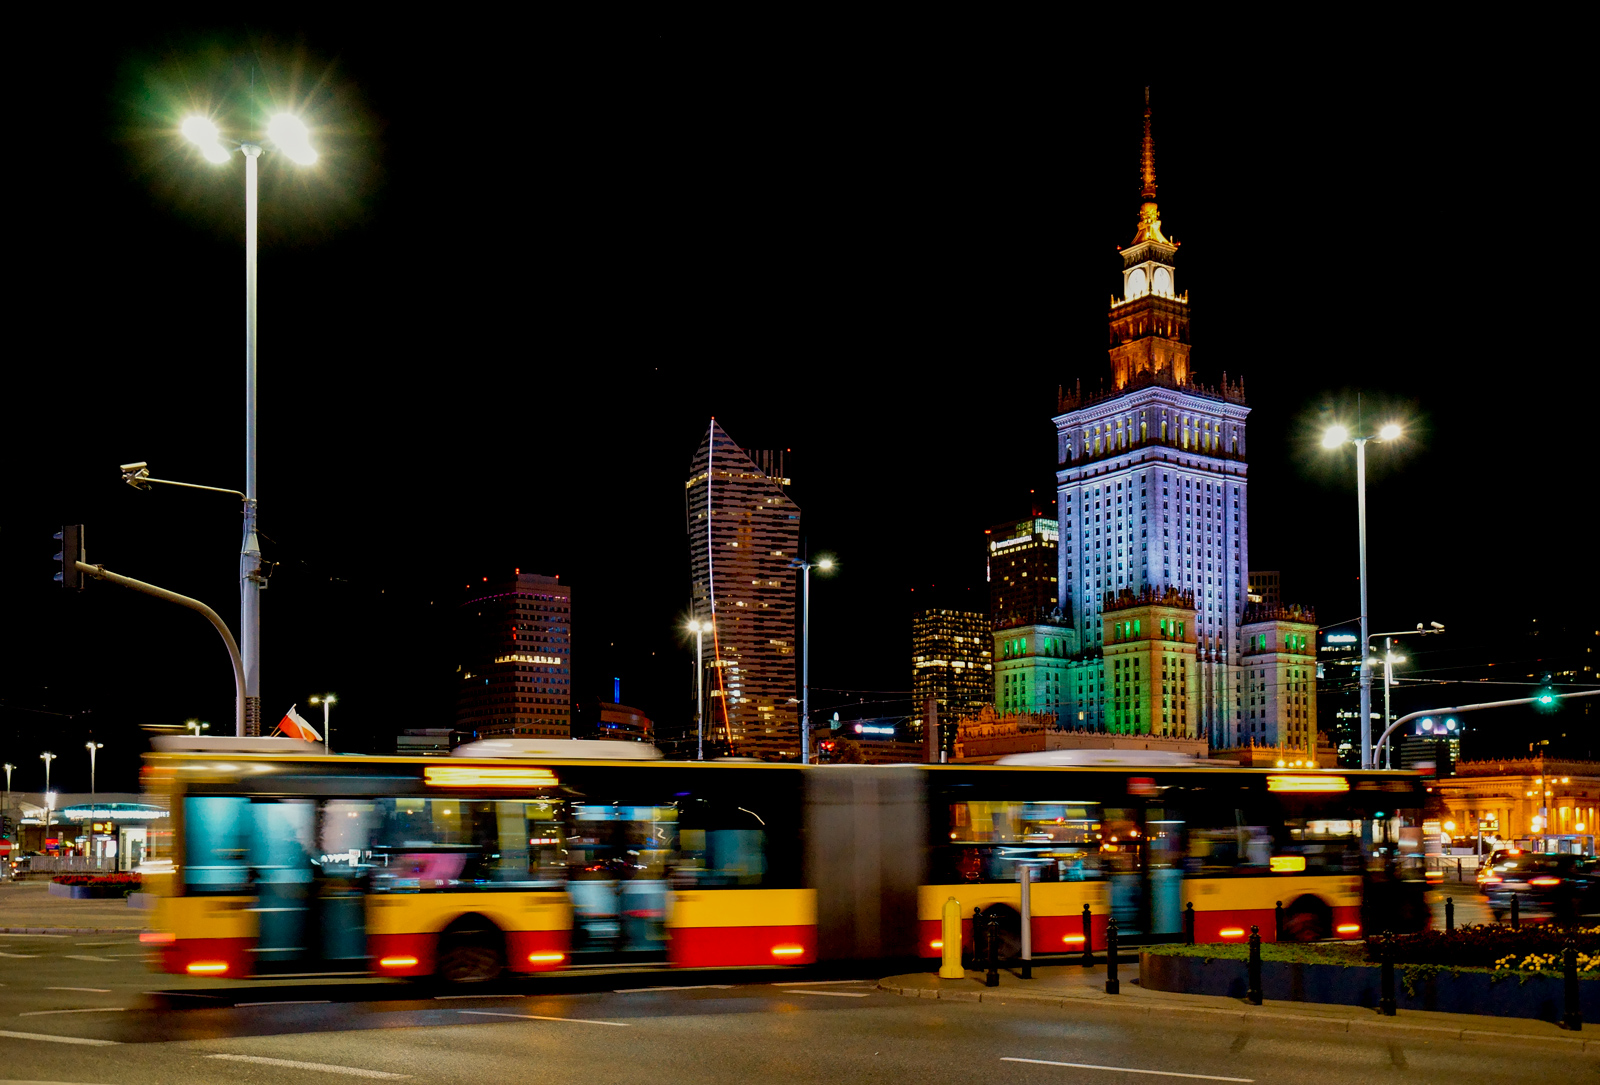 Warsaw by night...